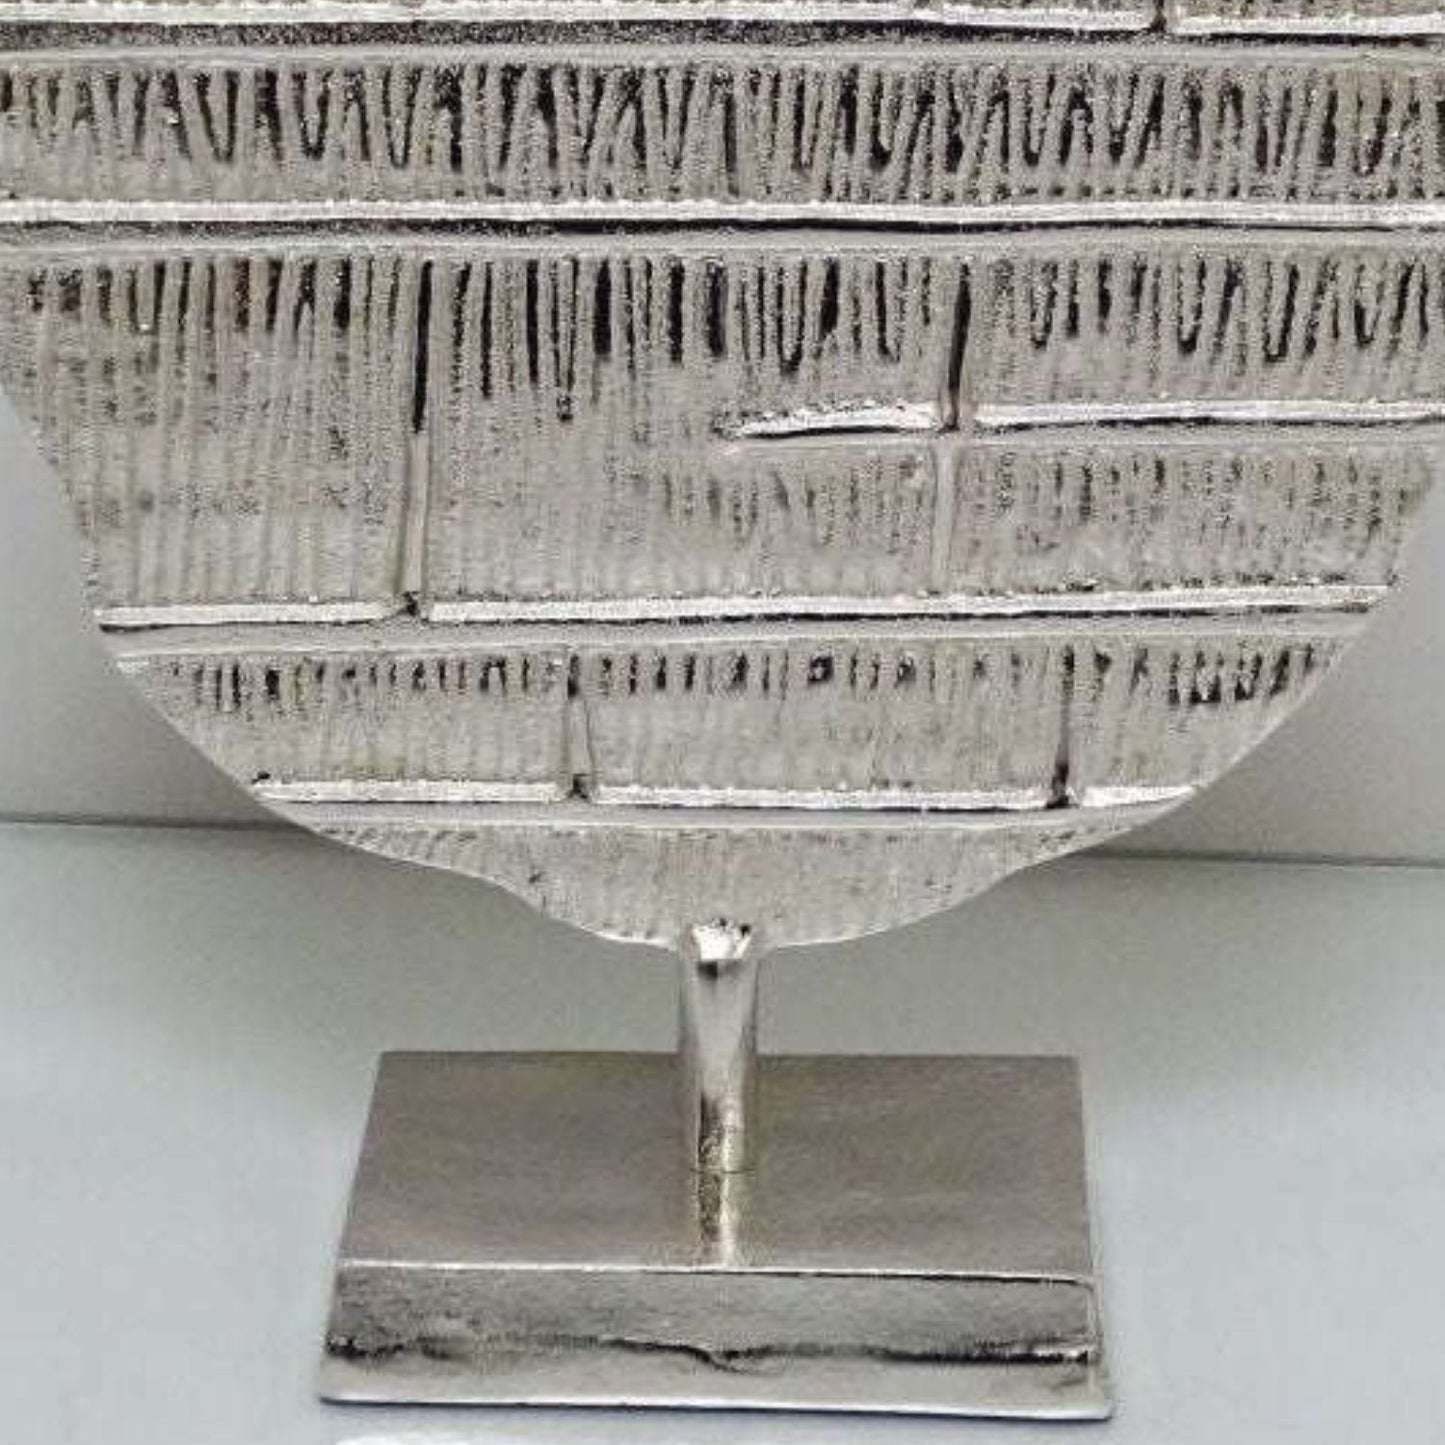 Silver sculpture ornament for interiors